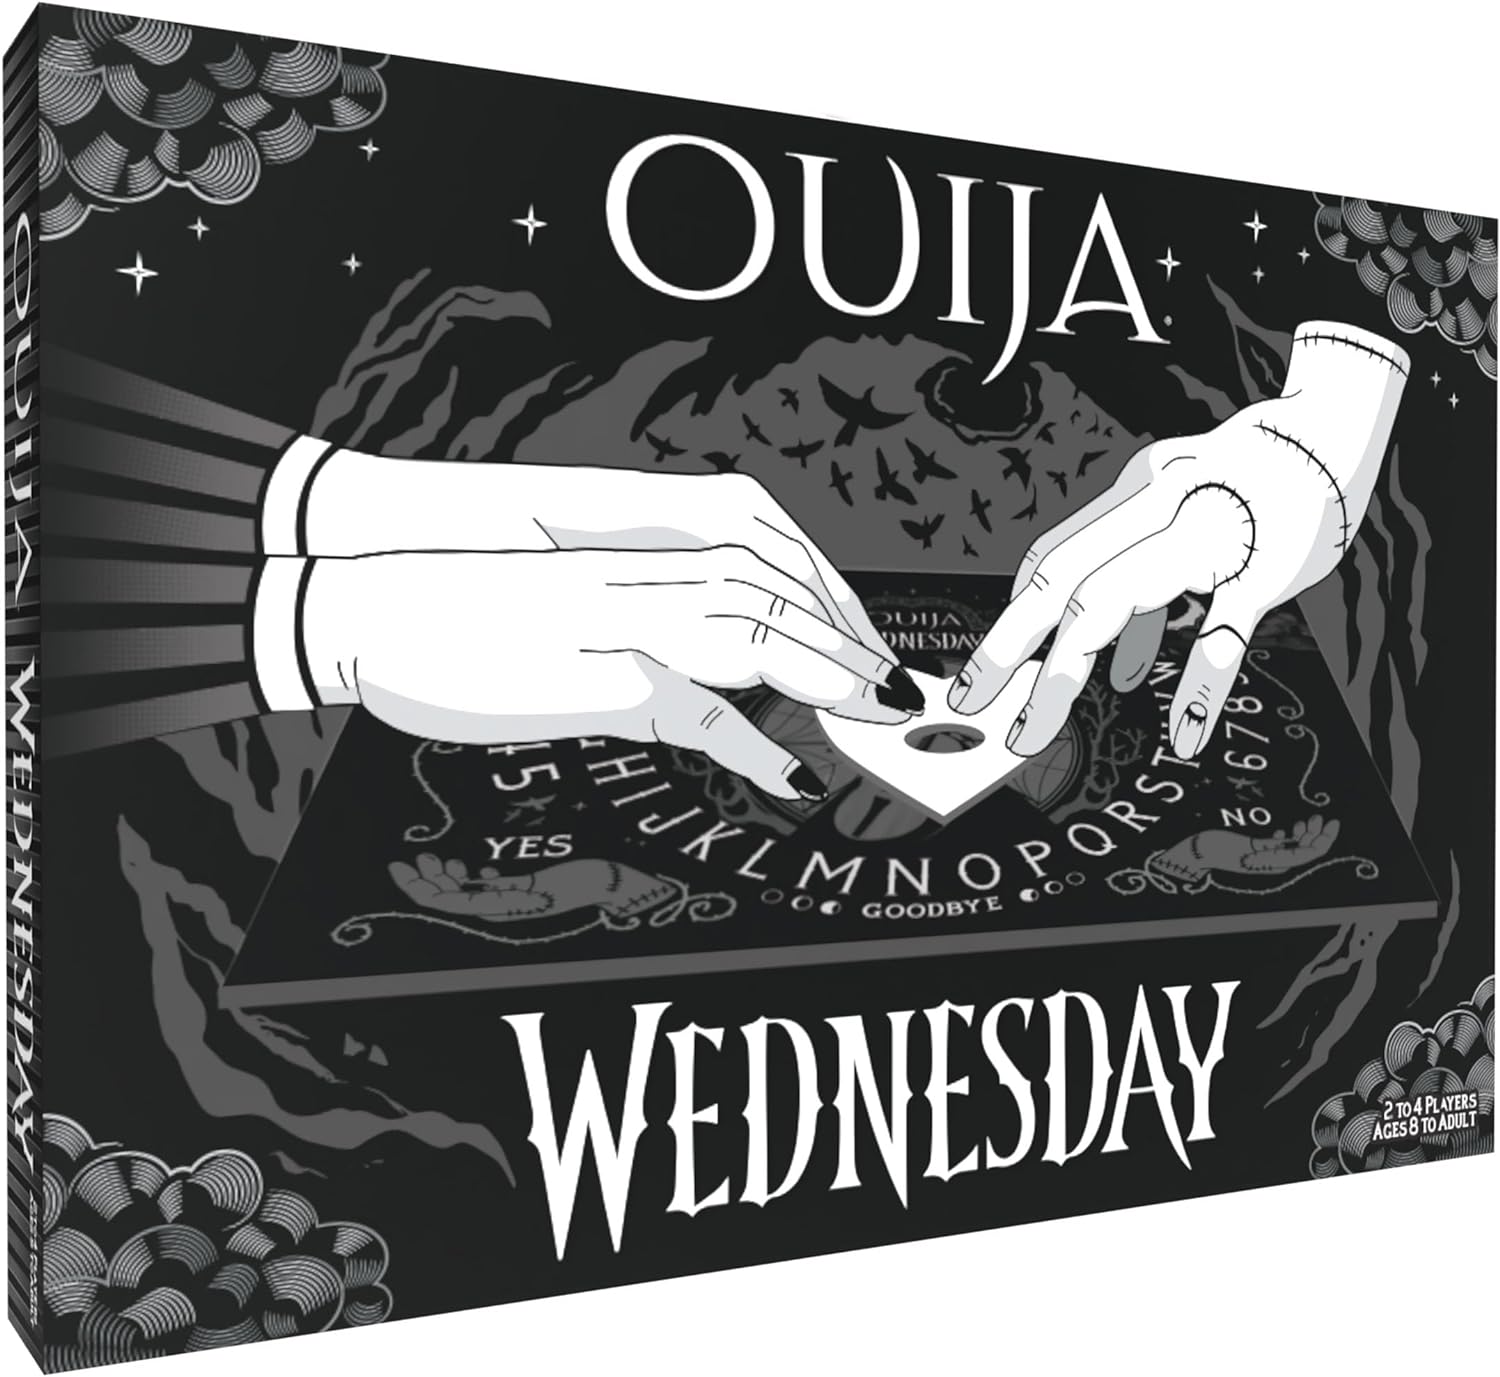 Wednesday Ouija